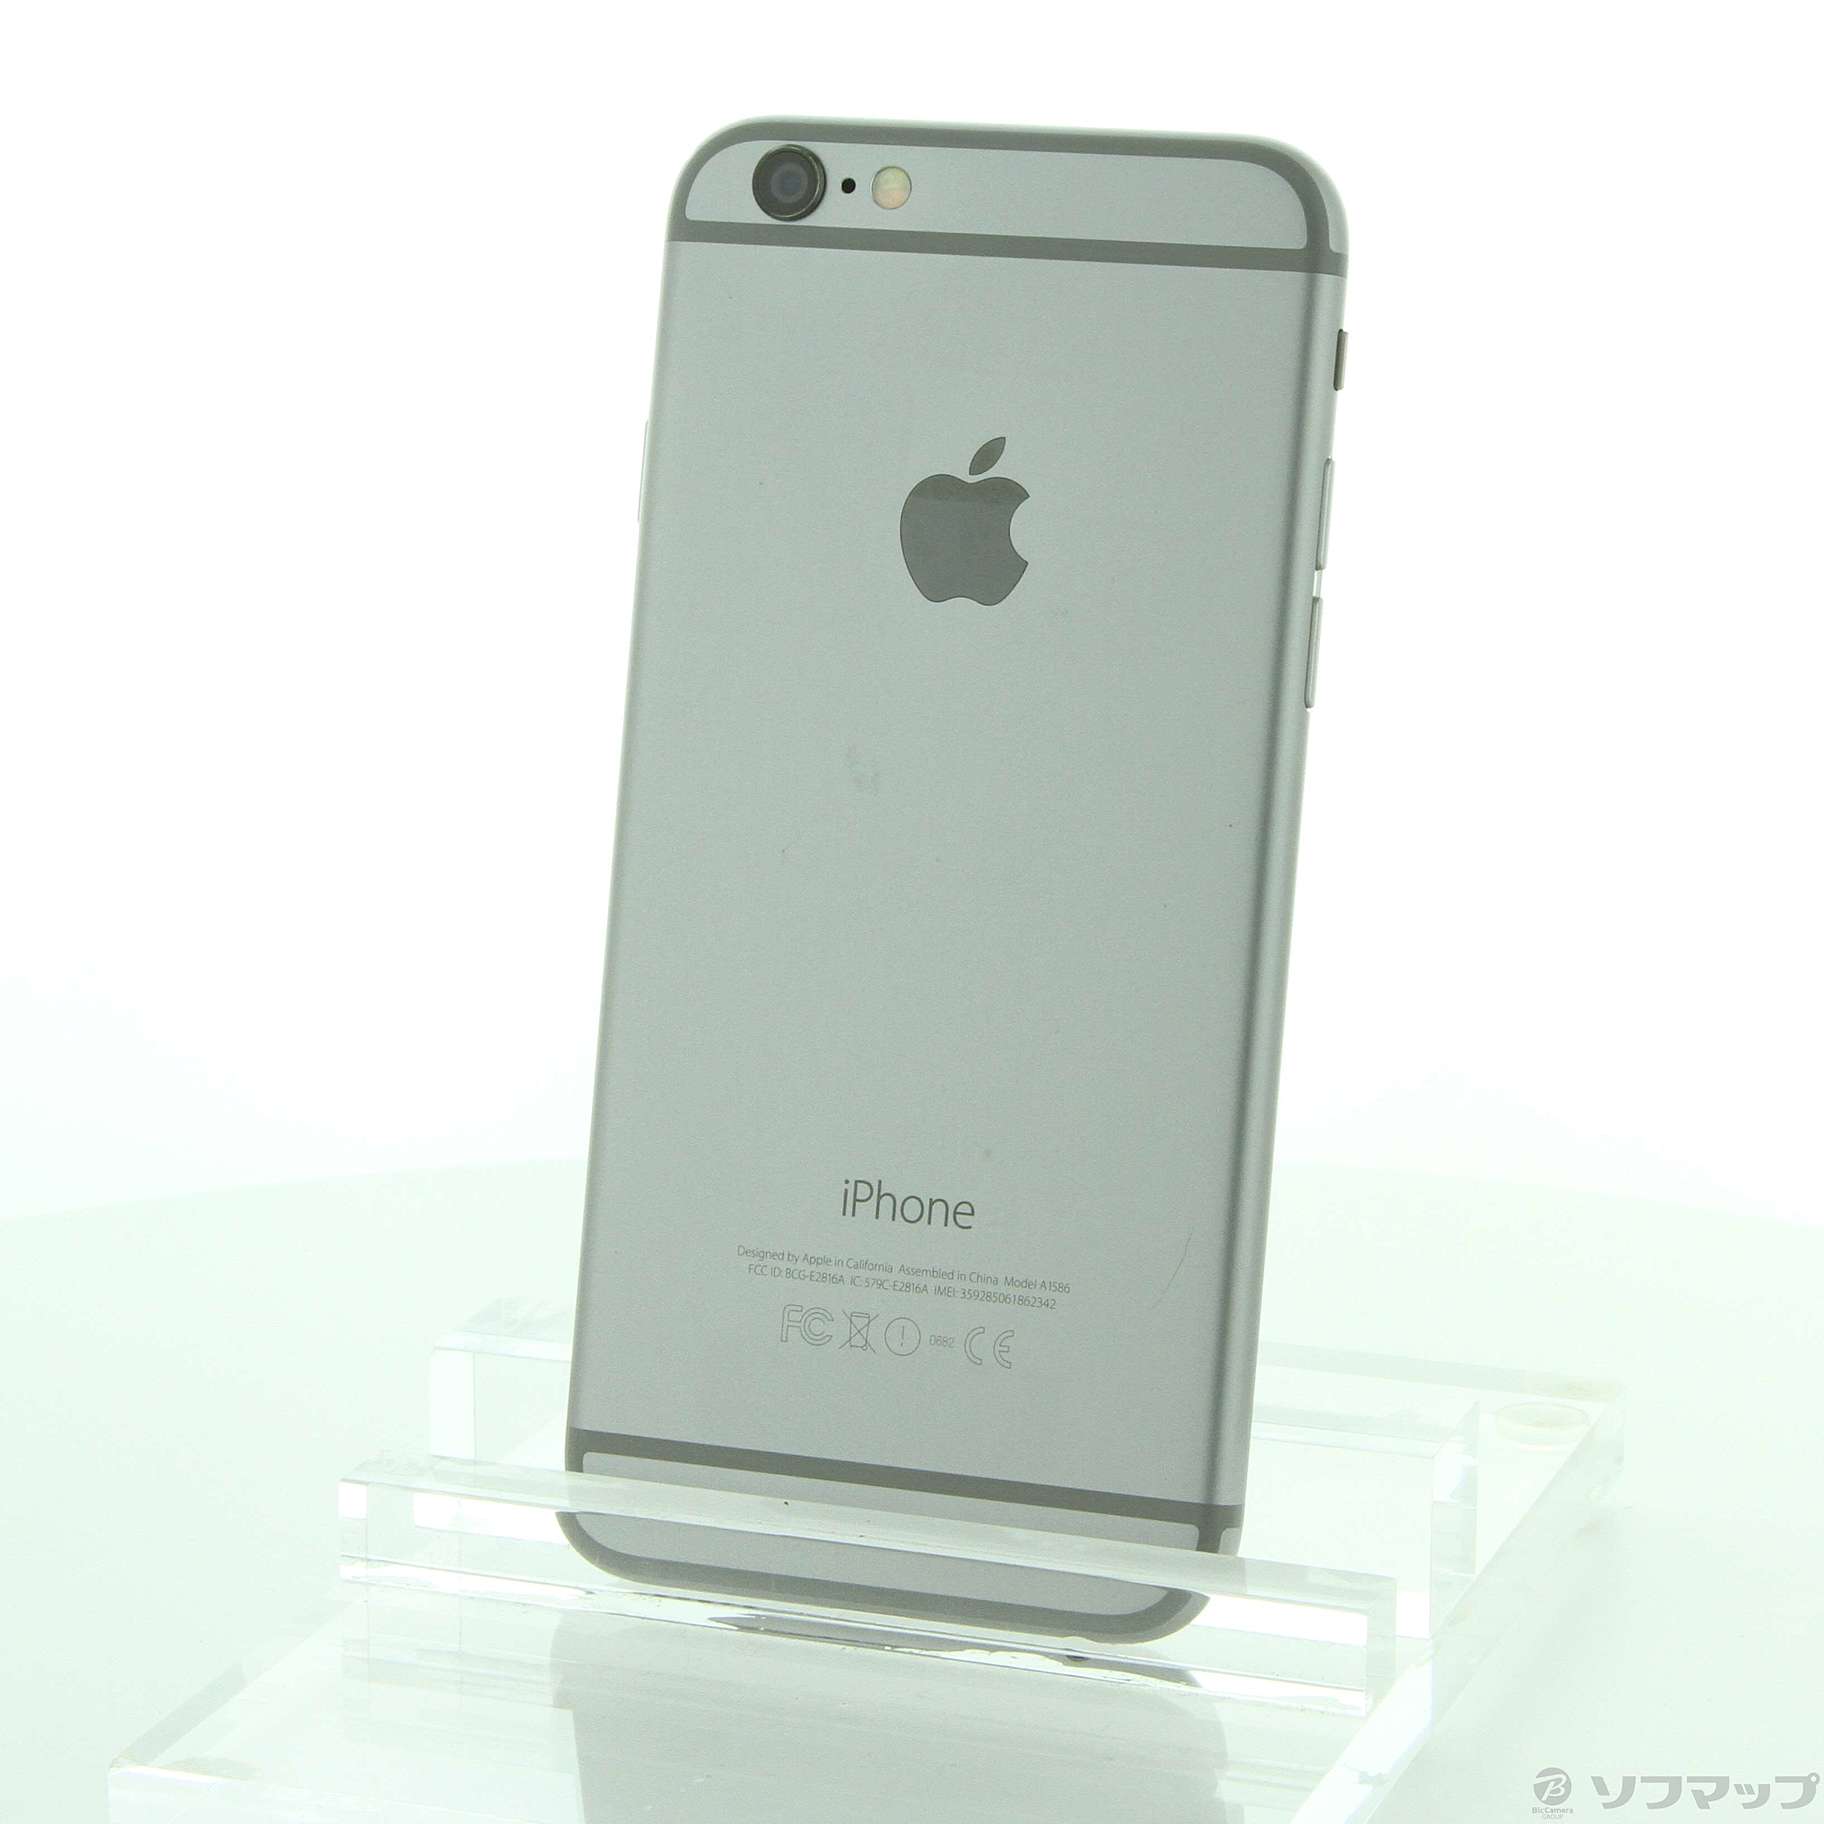 iPhone 6 Space Gray 16GB DOCOMO - スマートフォン本体